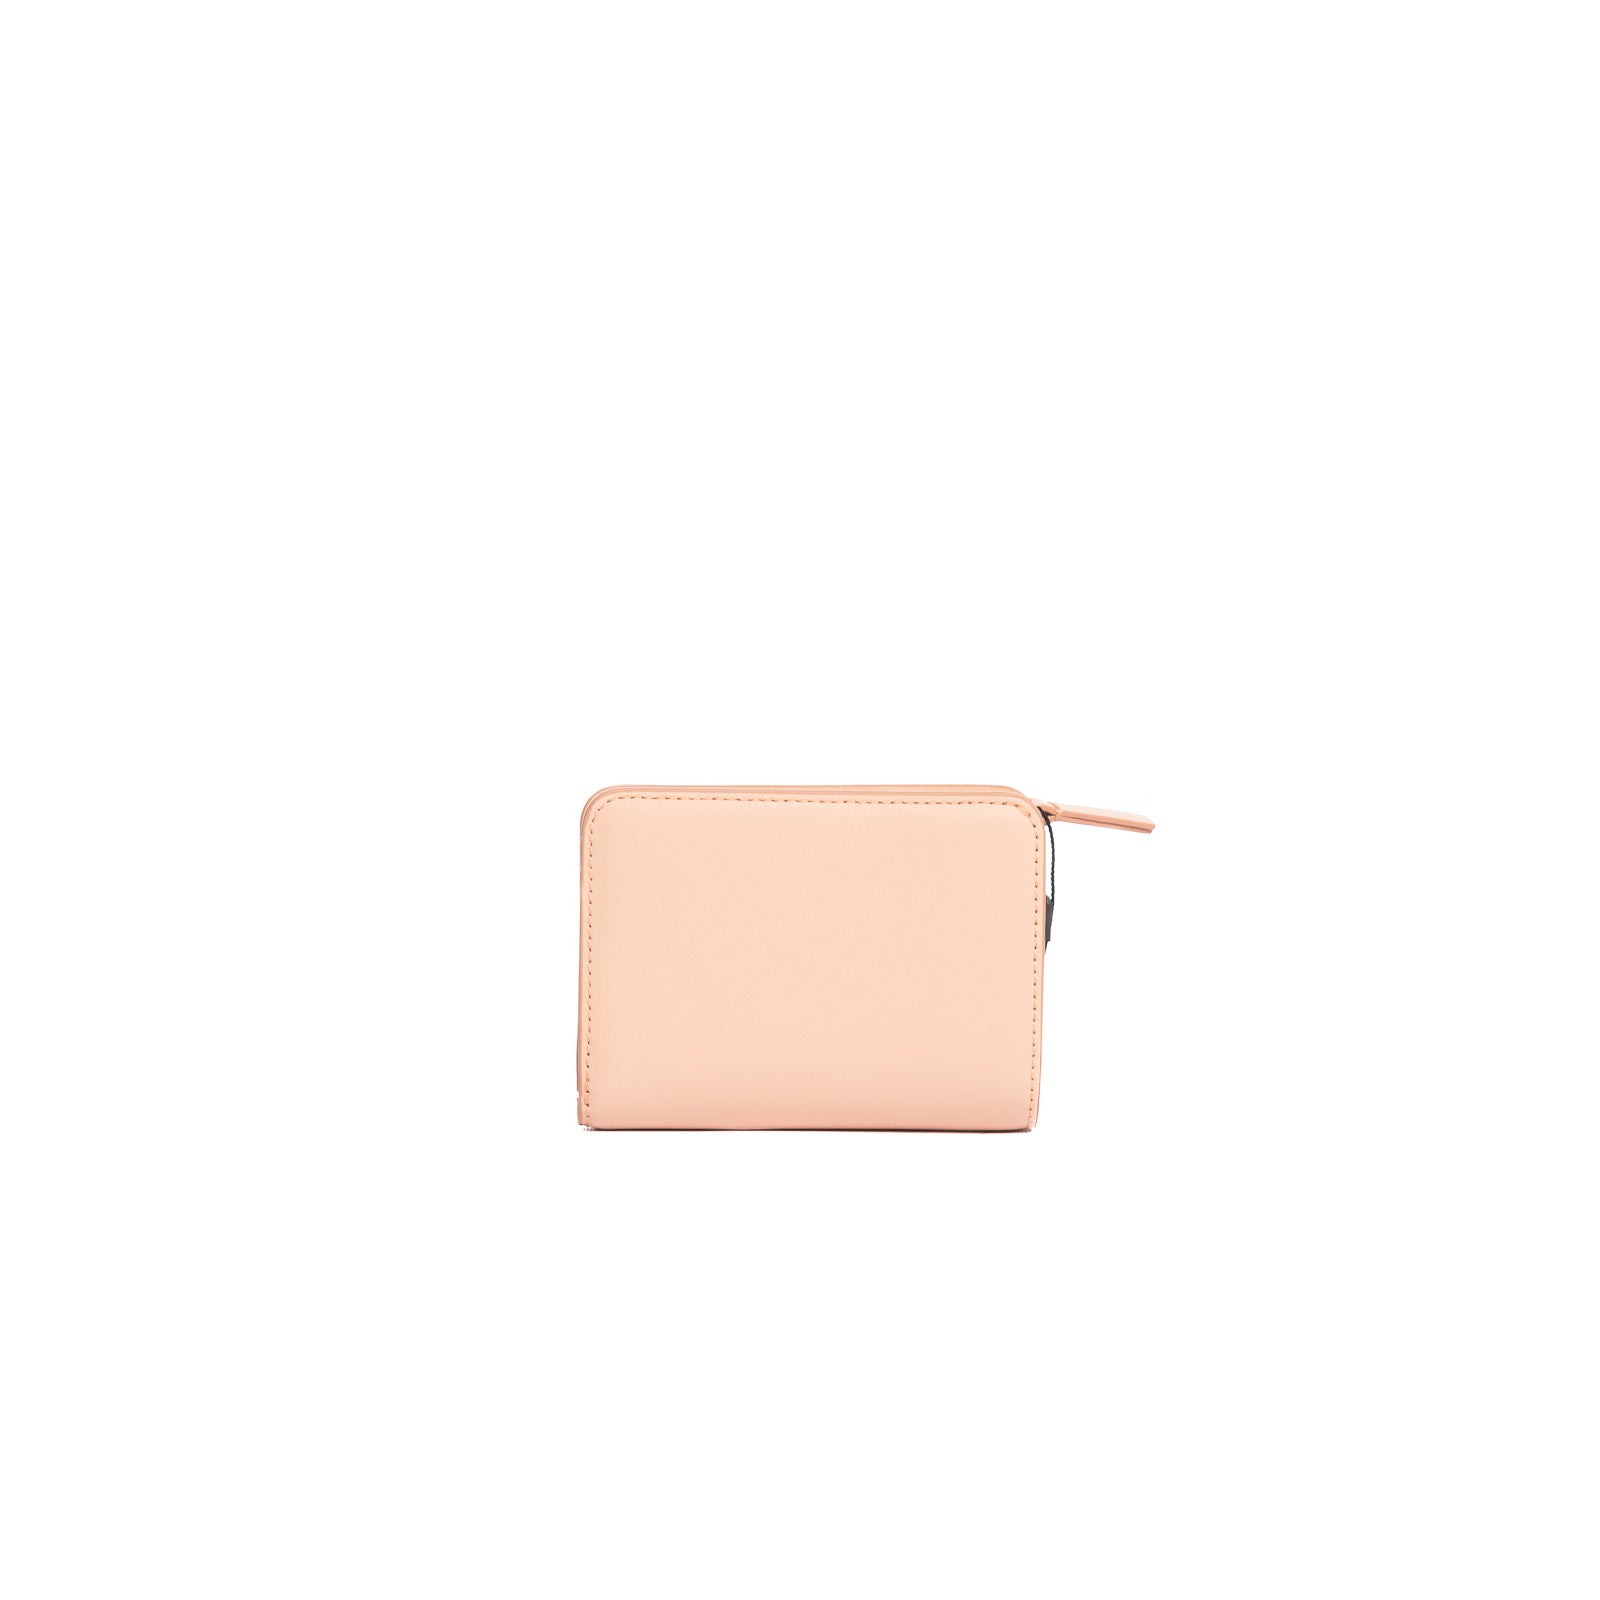 Portafoglio MARC JACOBS Mini compact wallet
Rosa